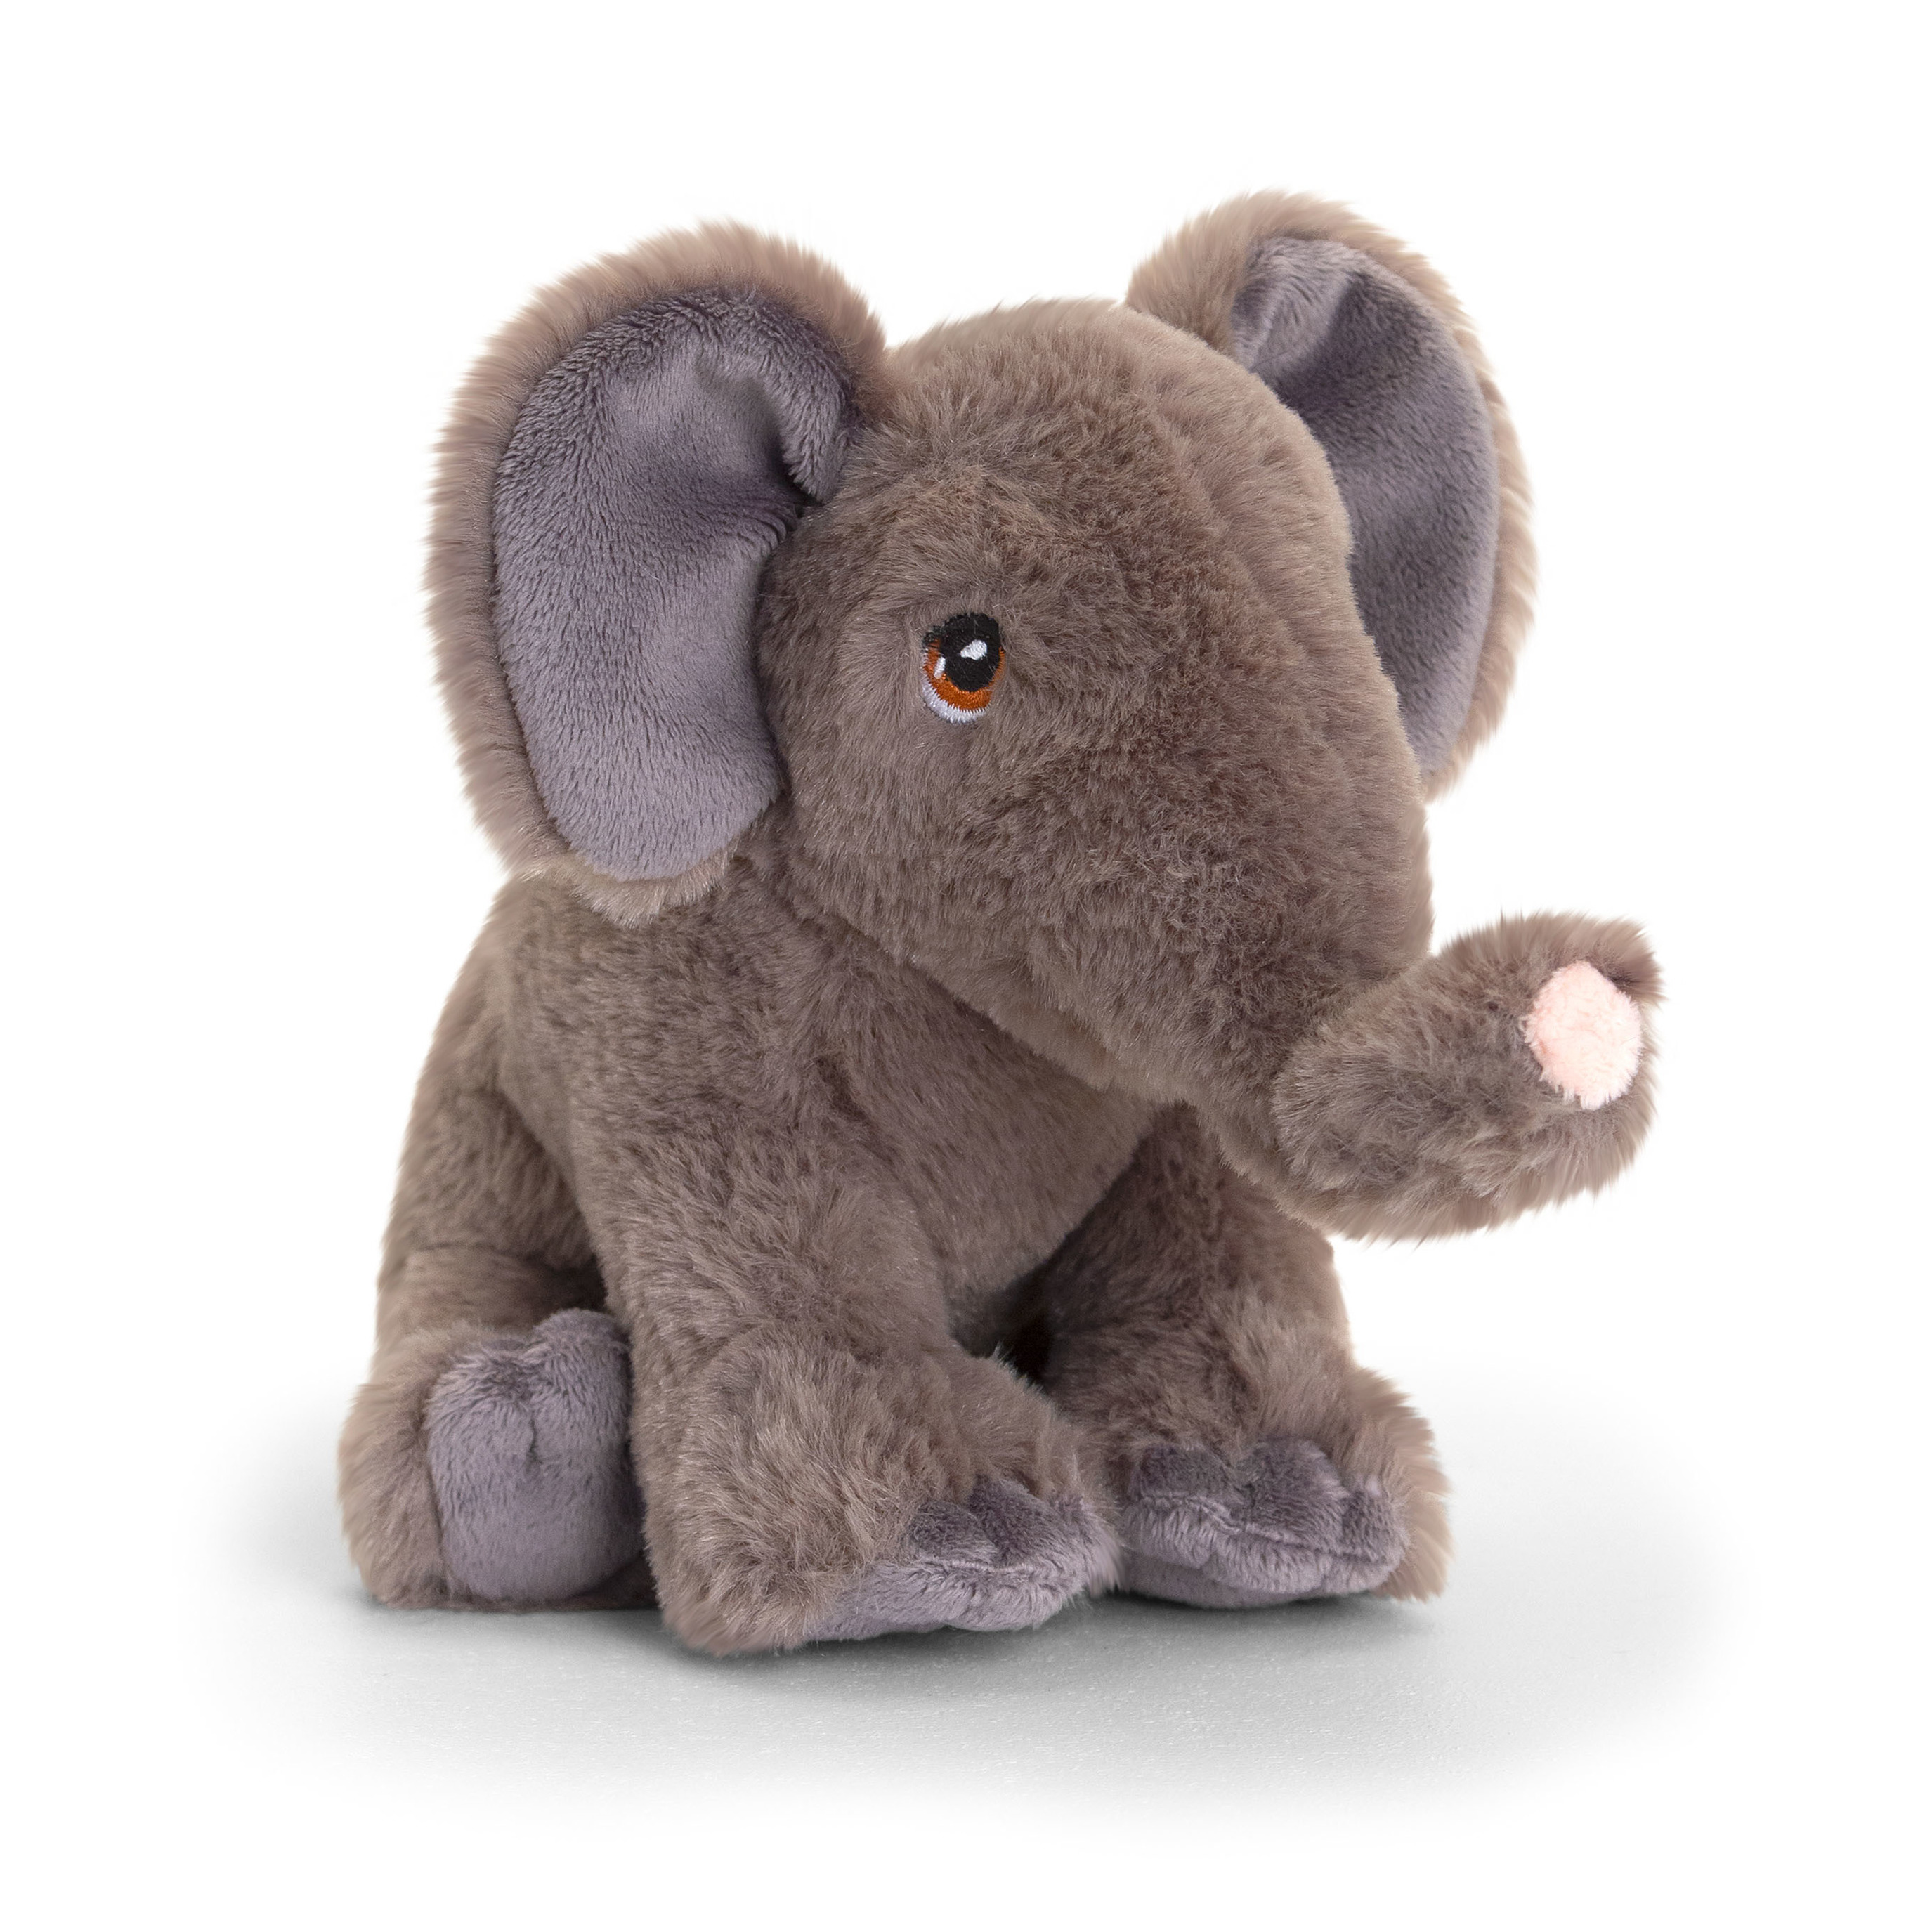 Pluche knuffel dier olifant 18 cm